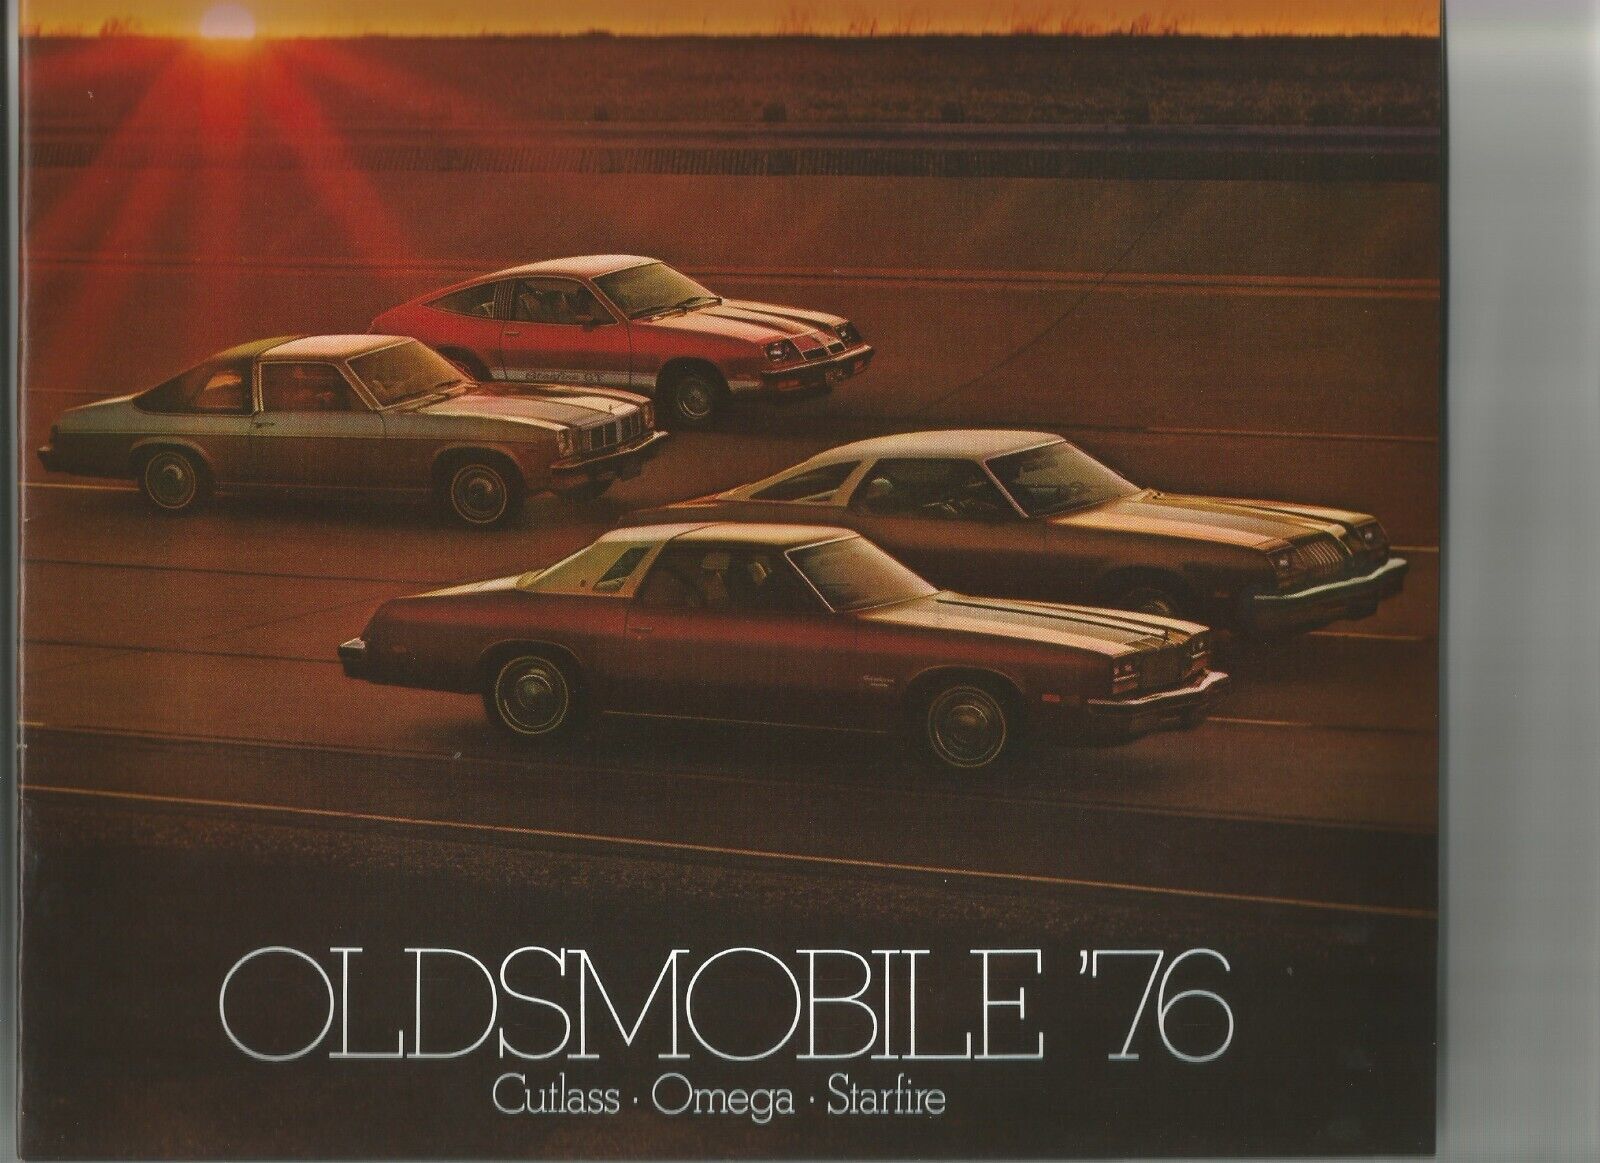 Original 1976 Oldsmobile Cutlass, Omega, and Starfire Sales Brochure, catalog